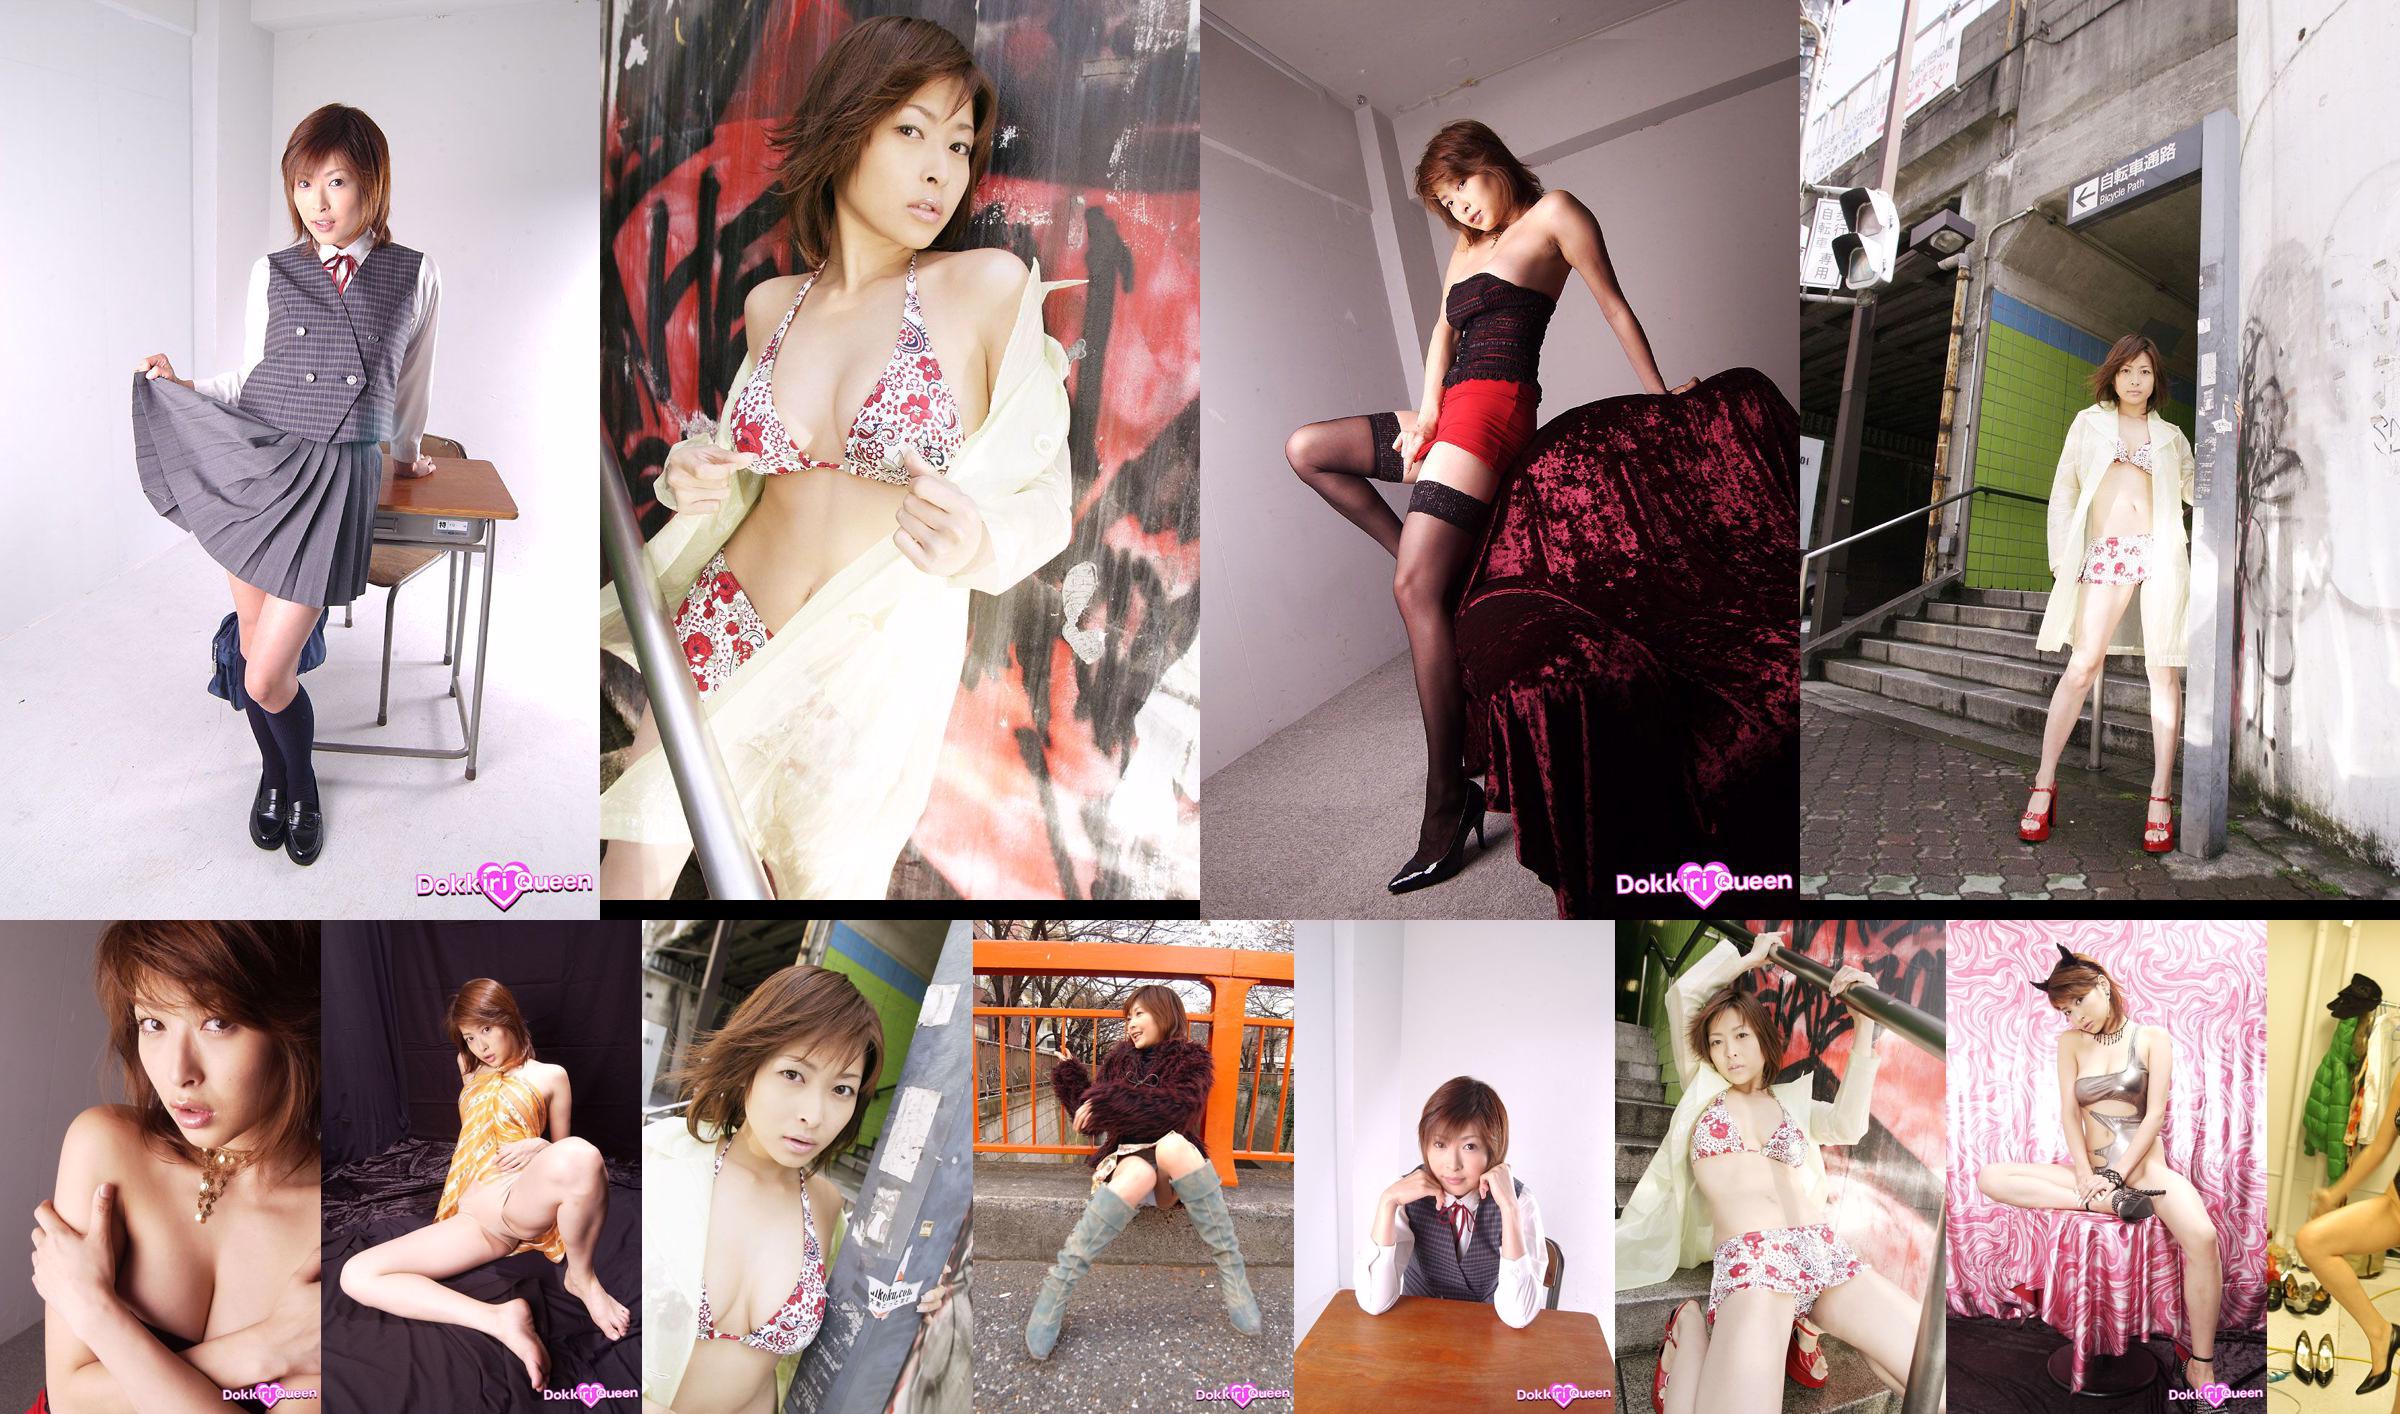 [X-City] Dokkiri Queen No.017 Nana Natsume / Nana Natsome Profile No.531d5d Trang 4